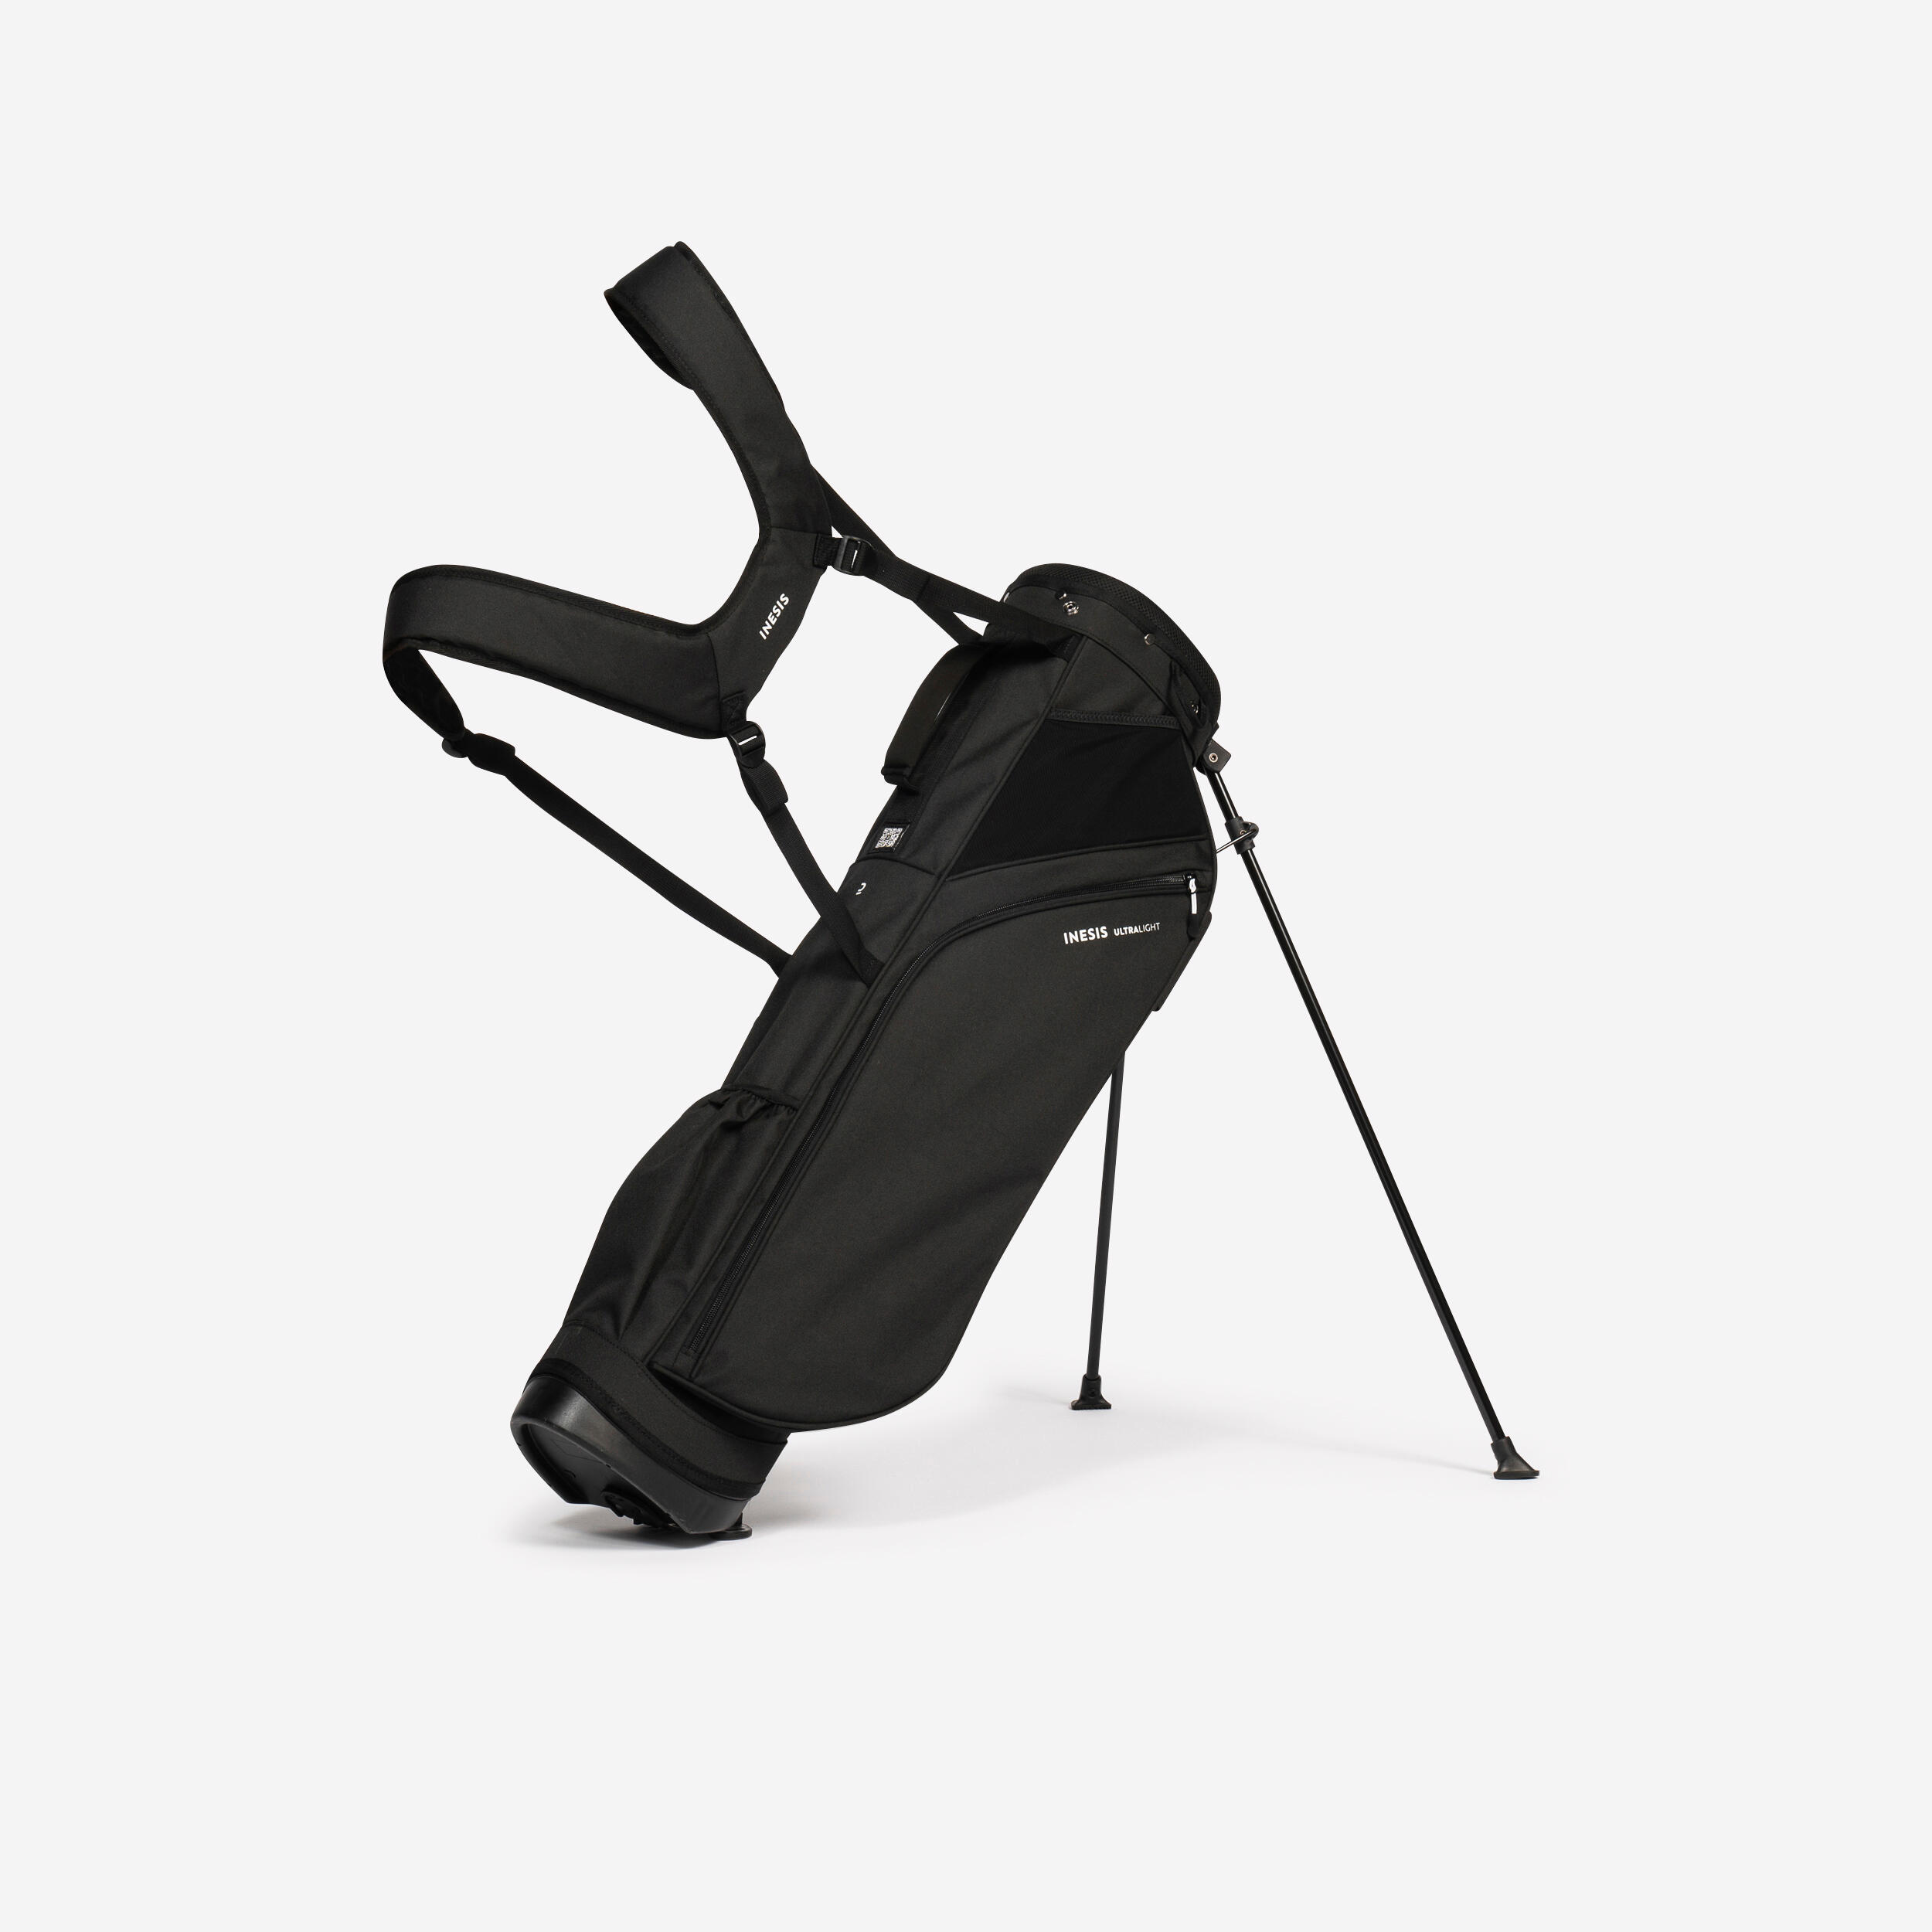 INESIS Golf stand bag - INESIS ultralight black